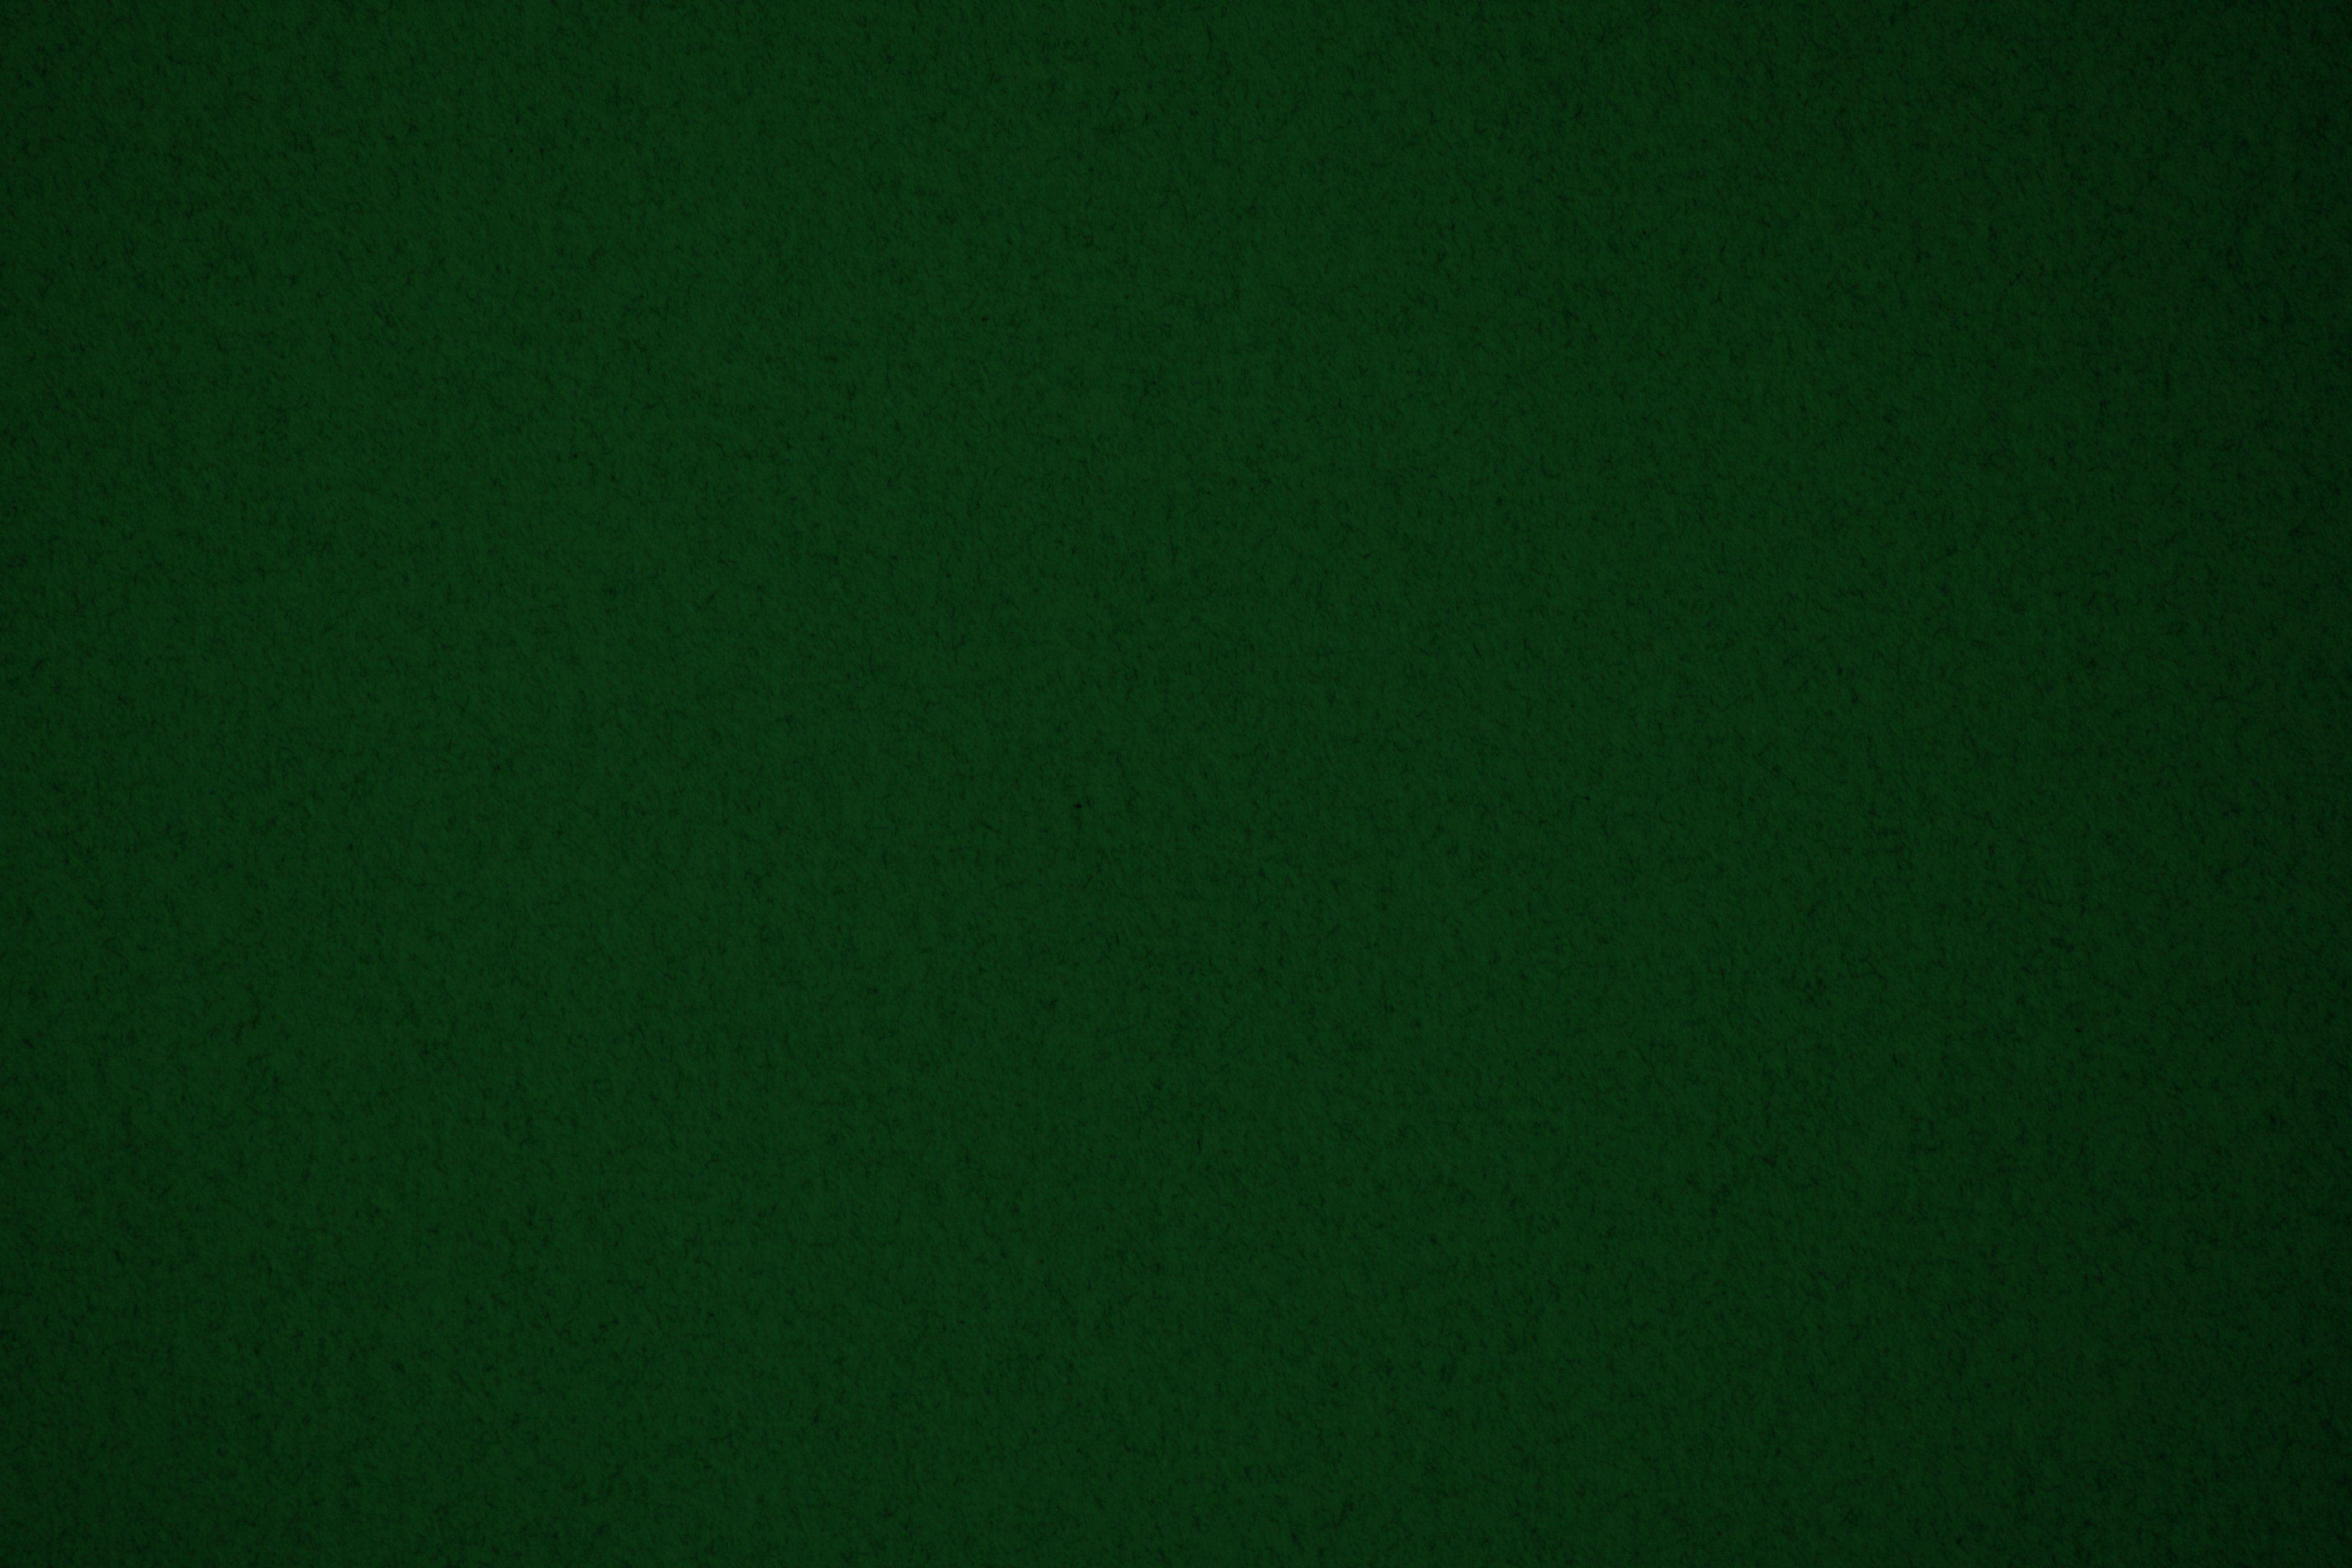 Dark Green backgroundDownload free High Resolution background